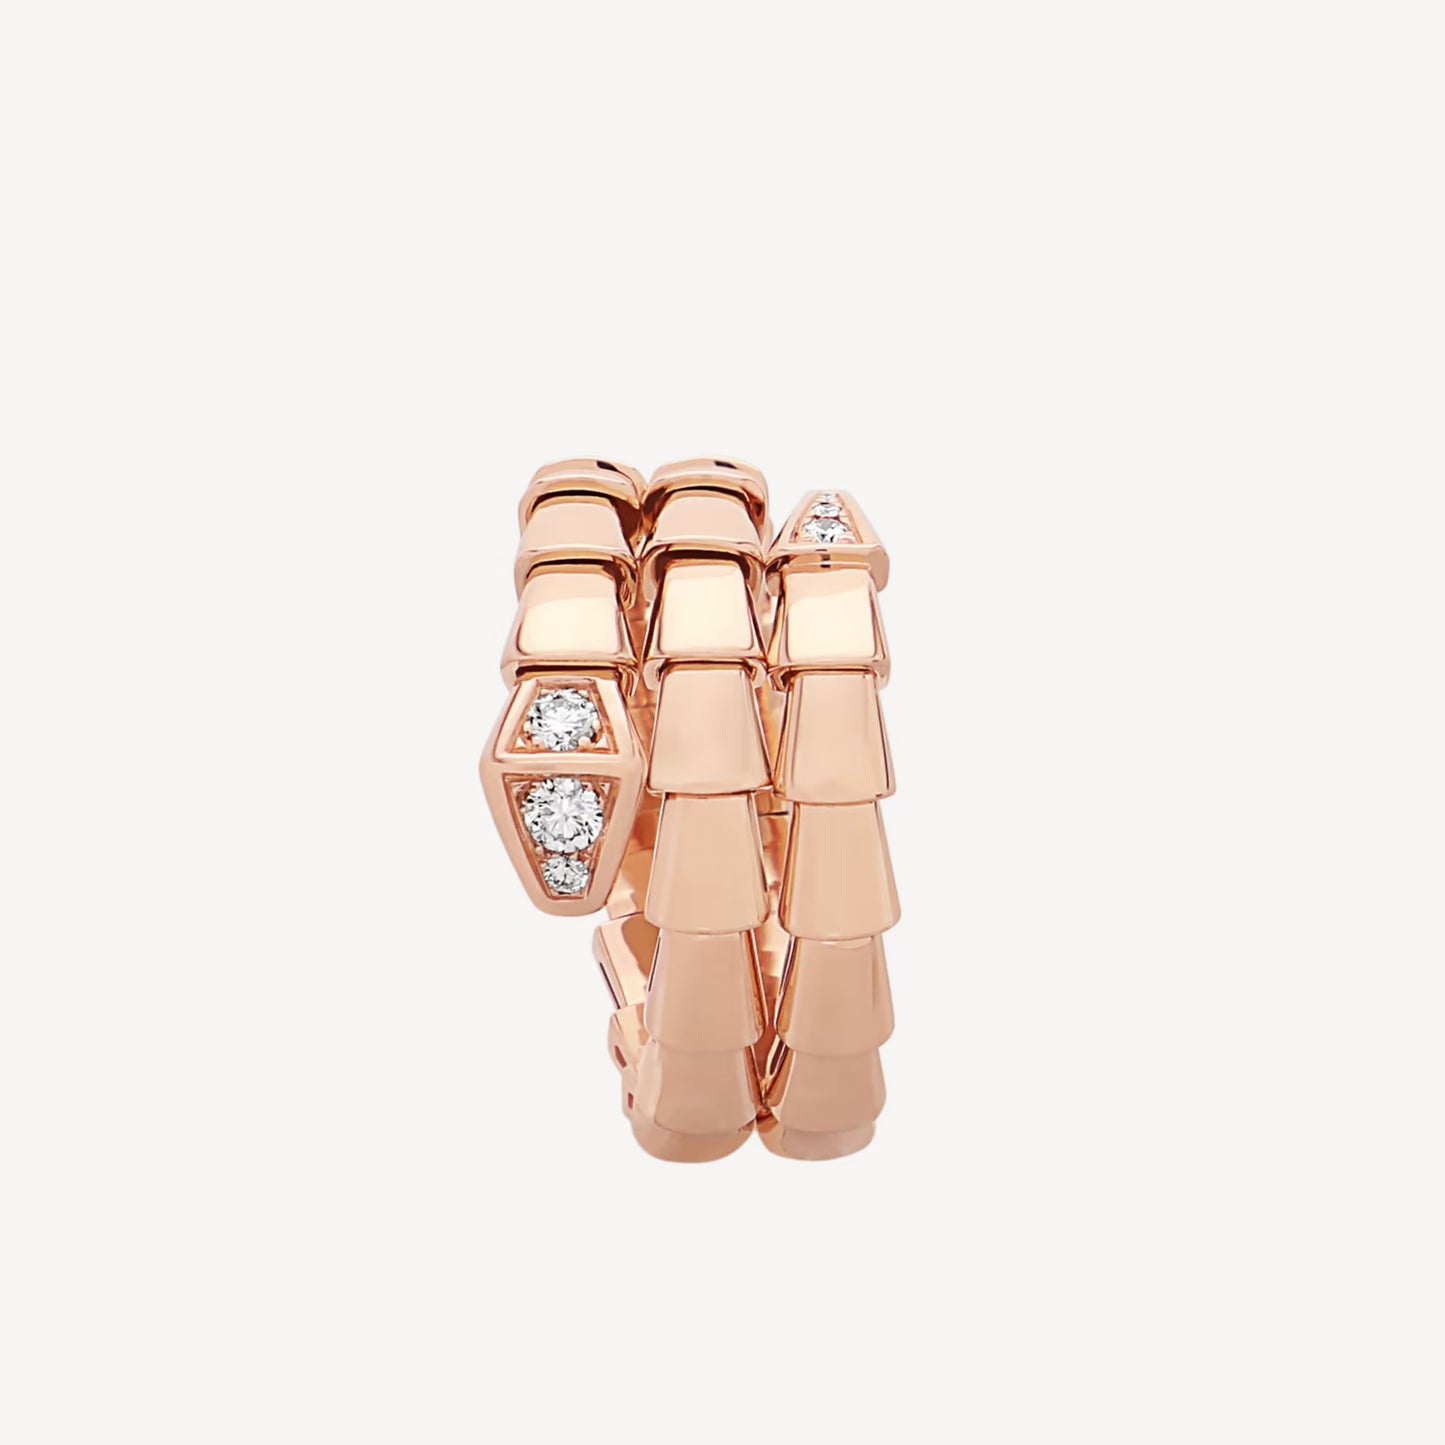 Bulgari Serpenti Viper Ring “Rose Gold / Diamonds”